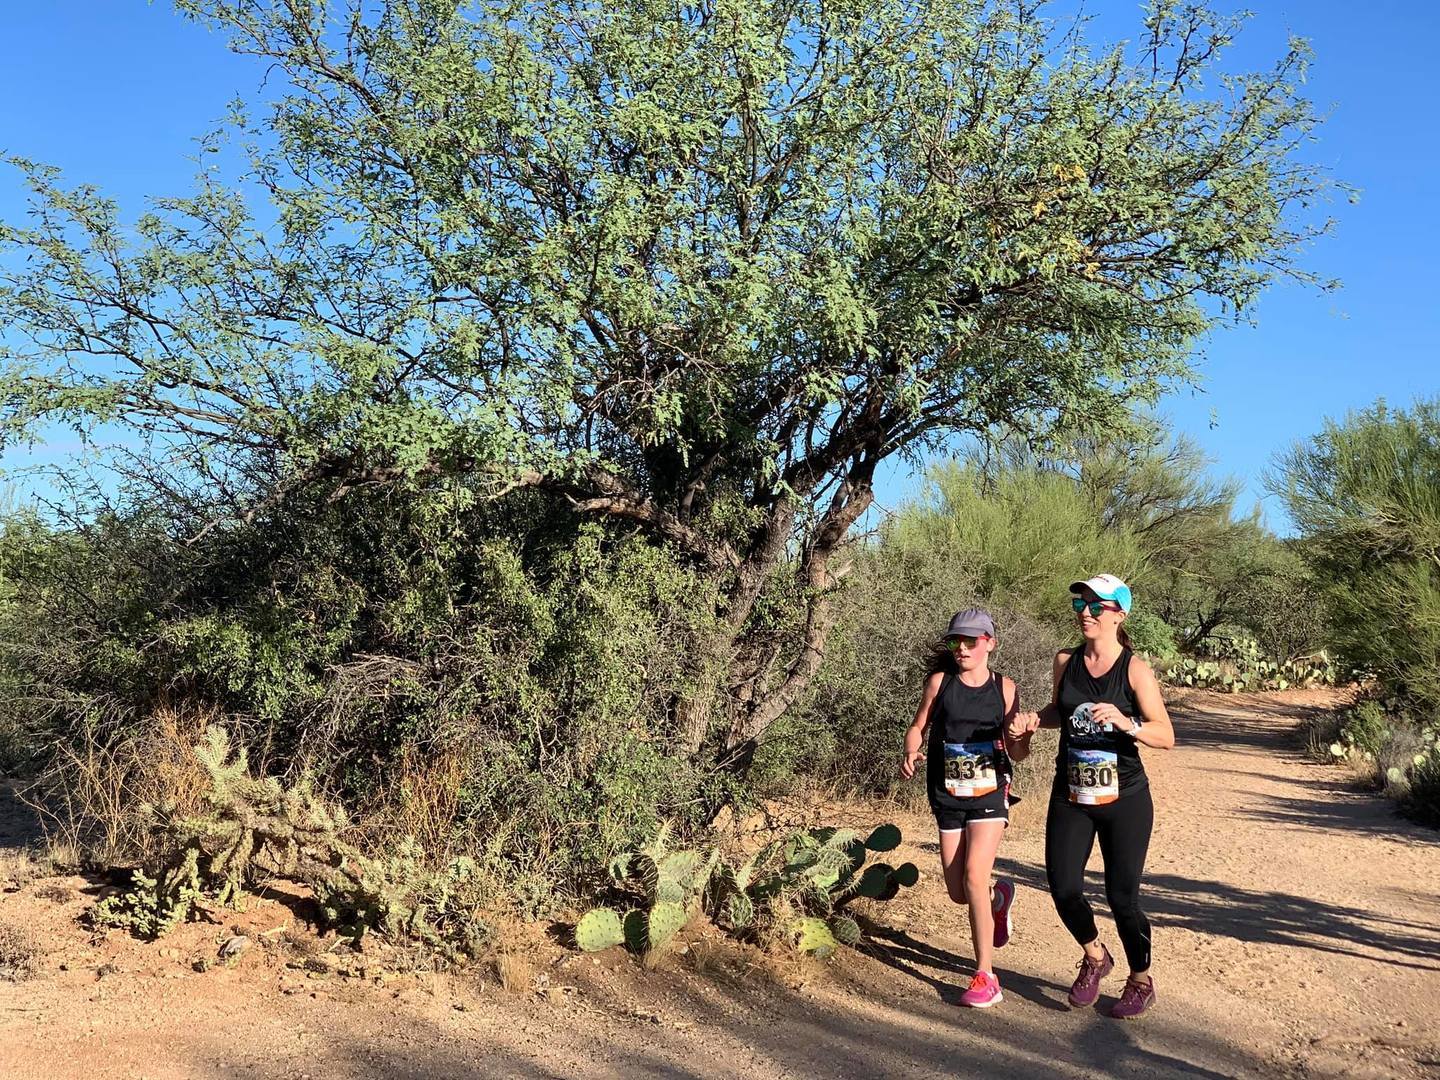 Everyone Runs Veterans Day Holualoa Catalina State Park Reverse the Course 5 and 10 Mile Trail Races, Tucson, Arizona, United States